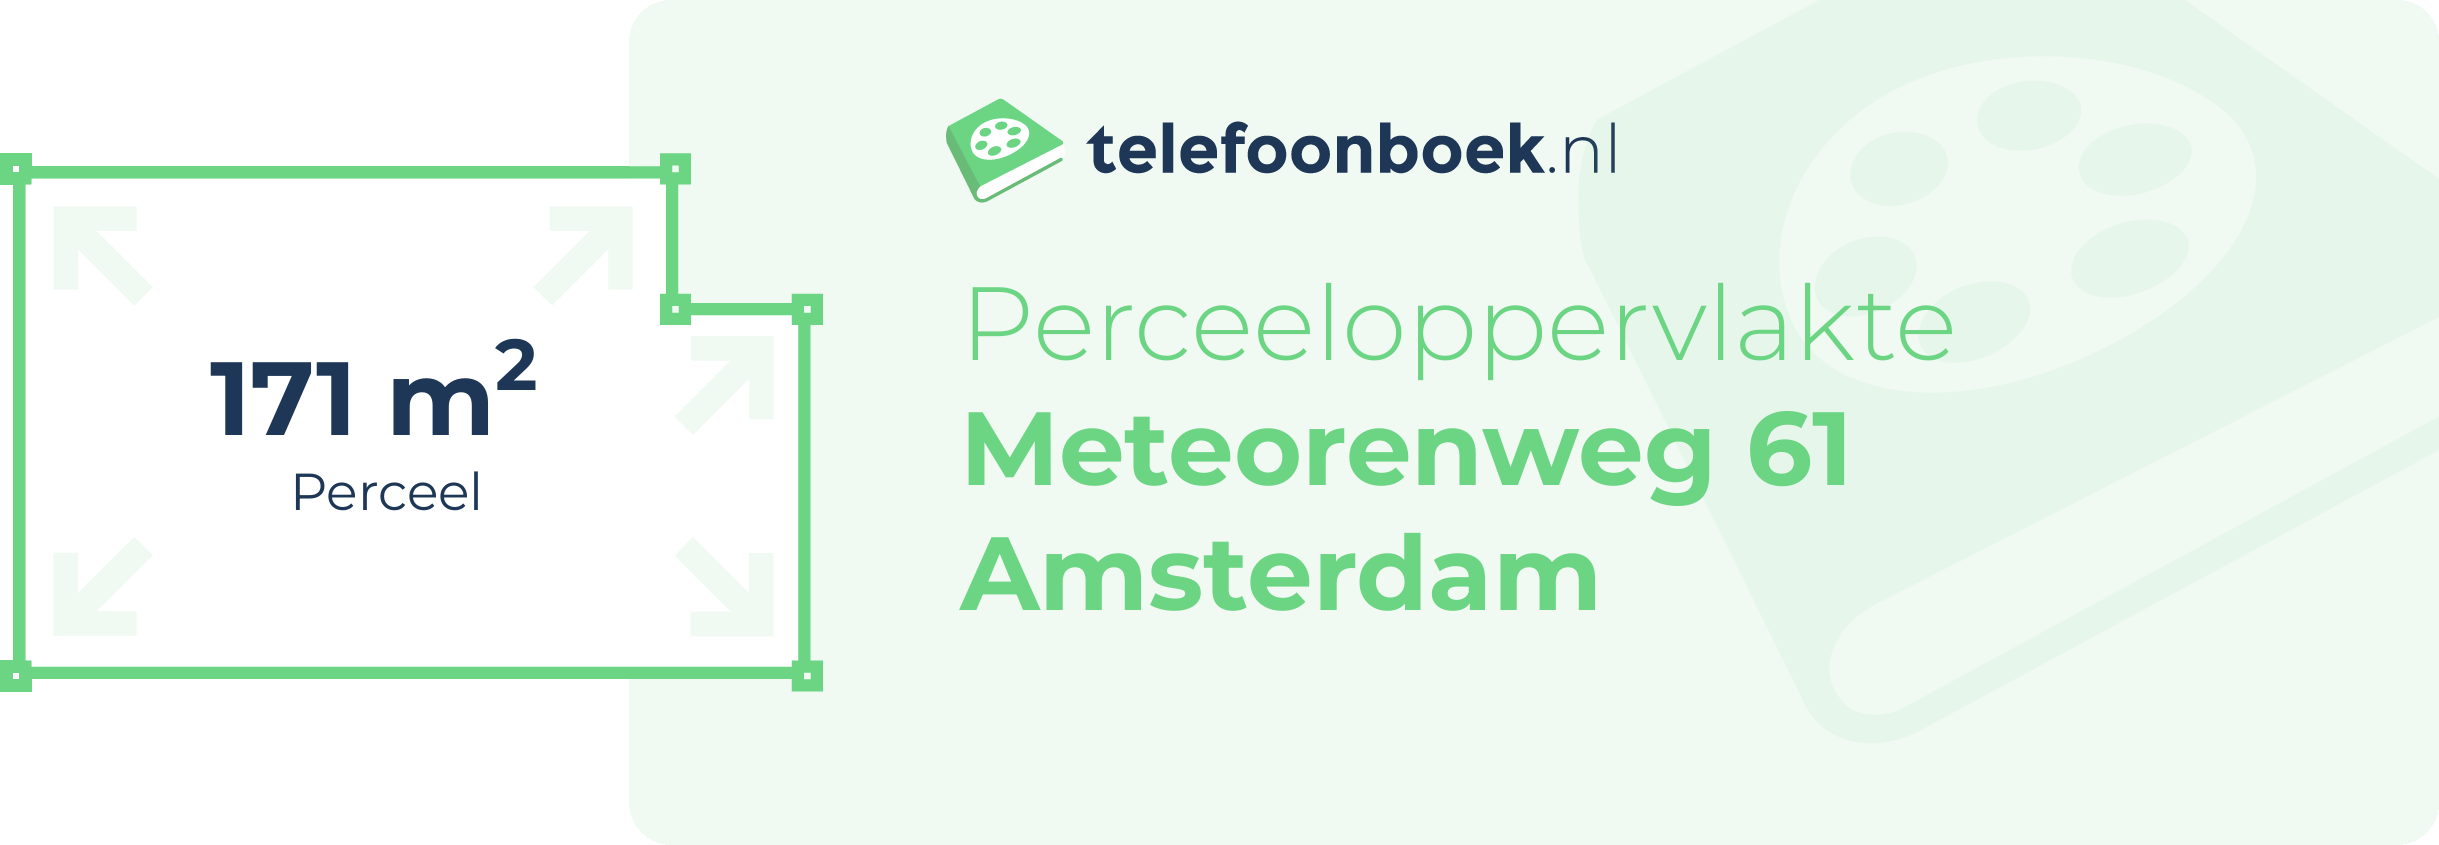 Perceeloppervlakte Meteorenweg 61 Amsterdam